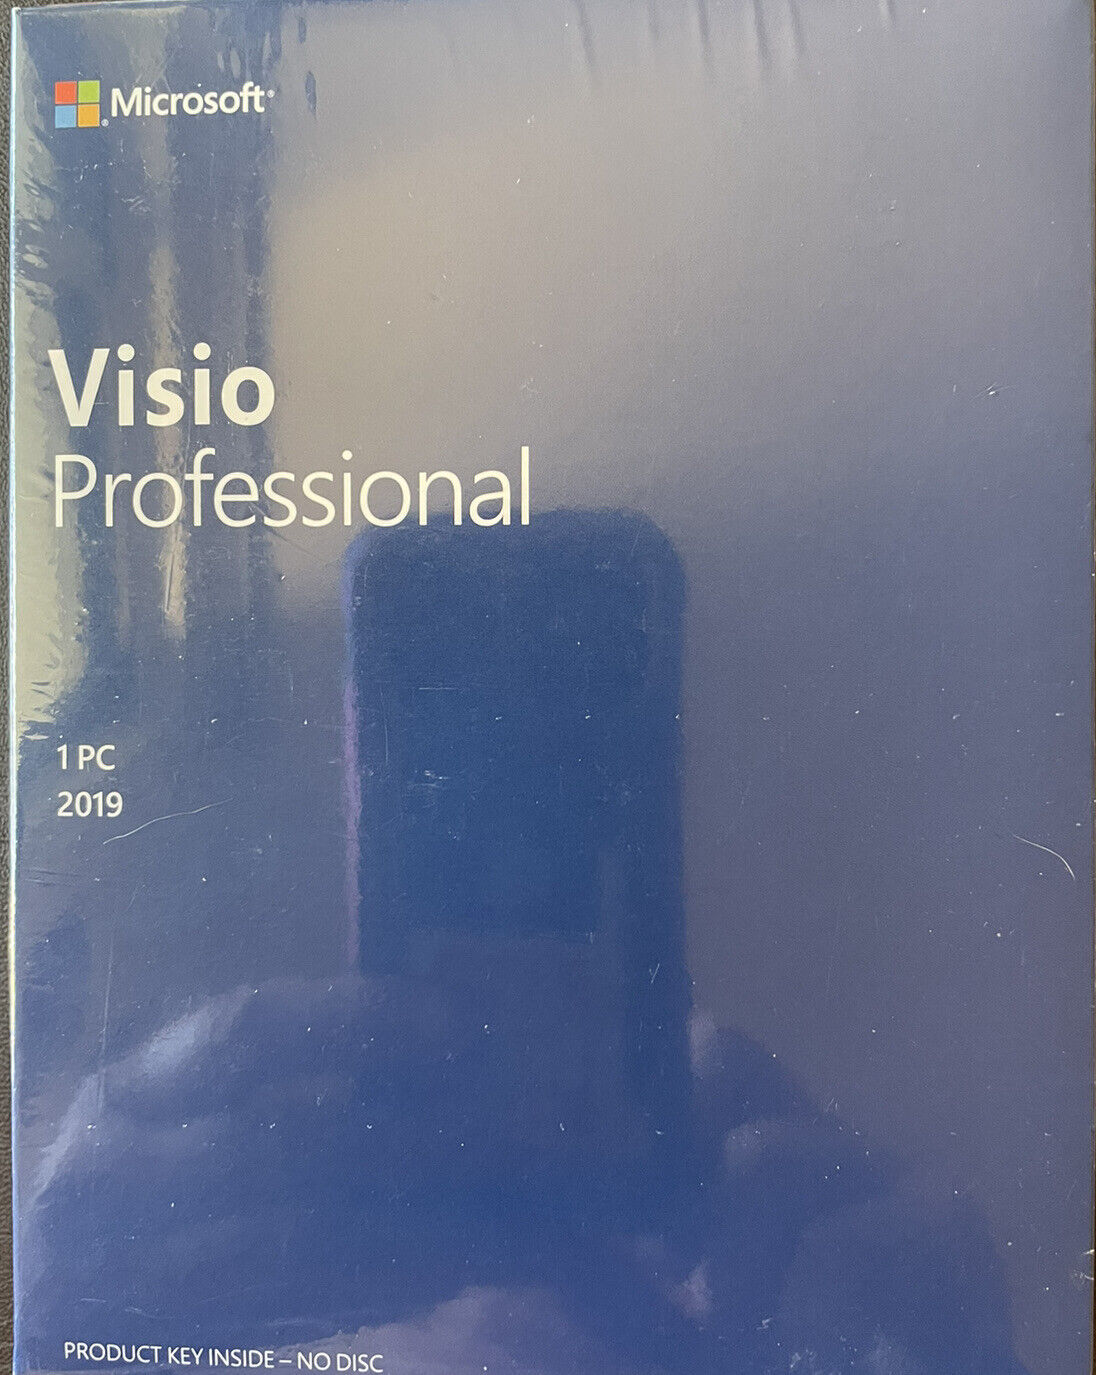 Microsoft Visio 2019 Professional Retail Box New Sealed